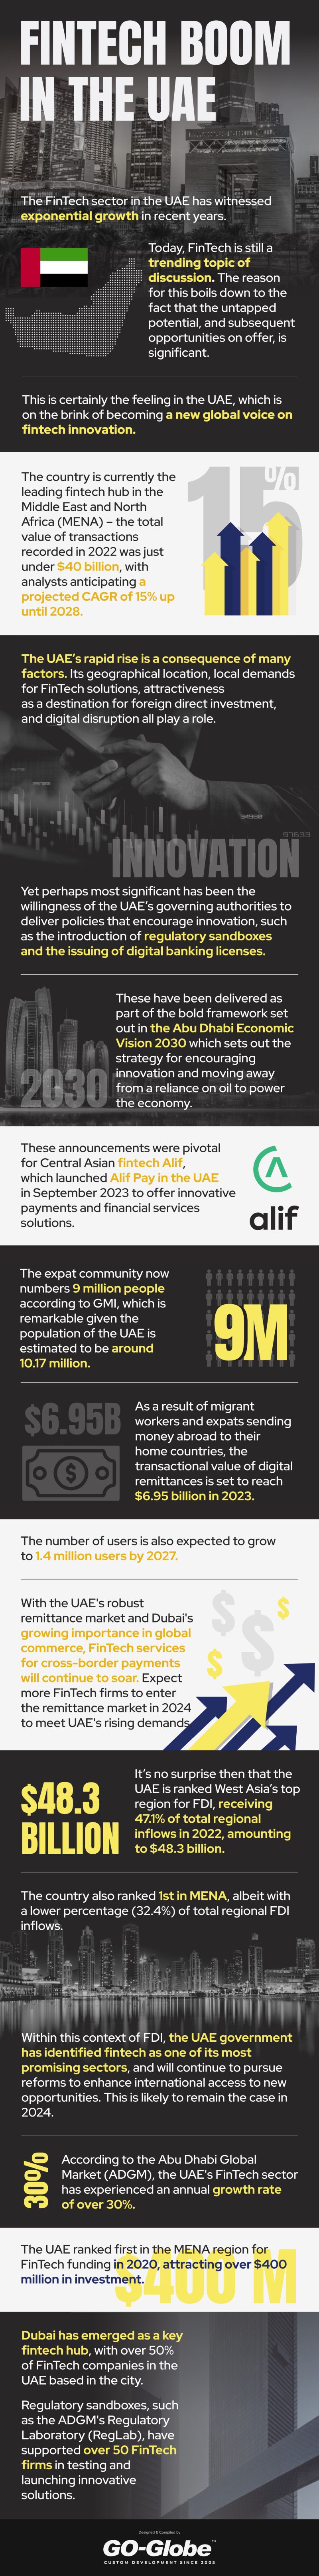 FinTech Boom in the UAE